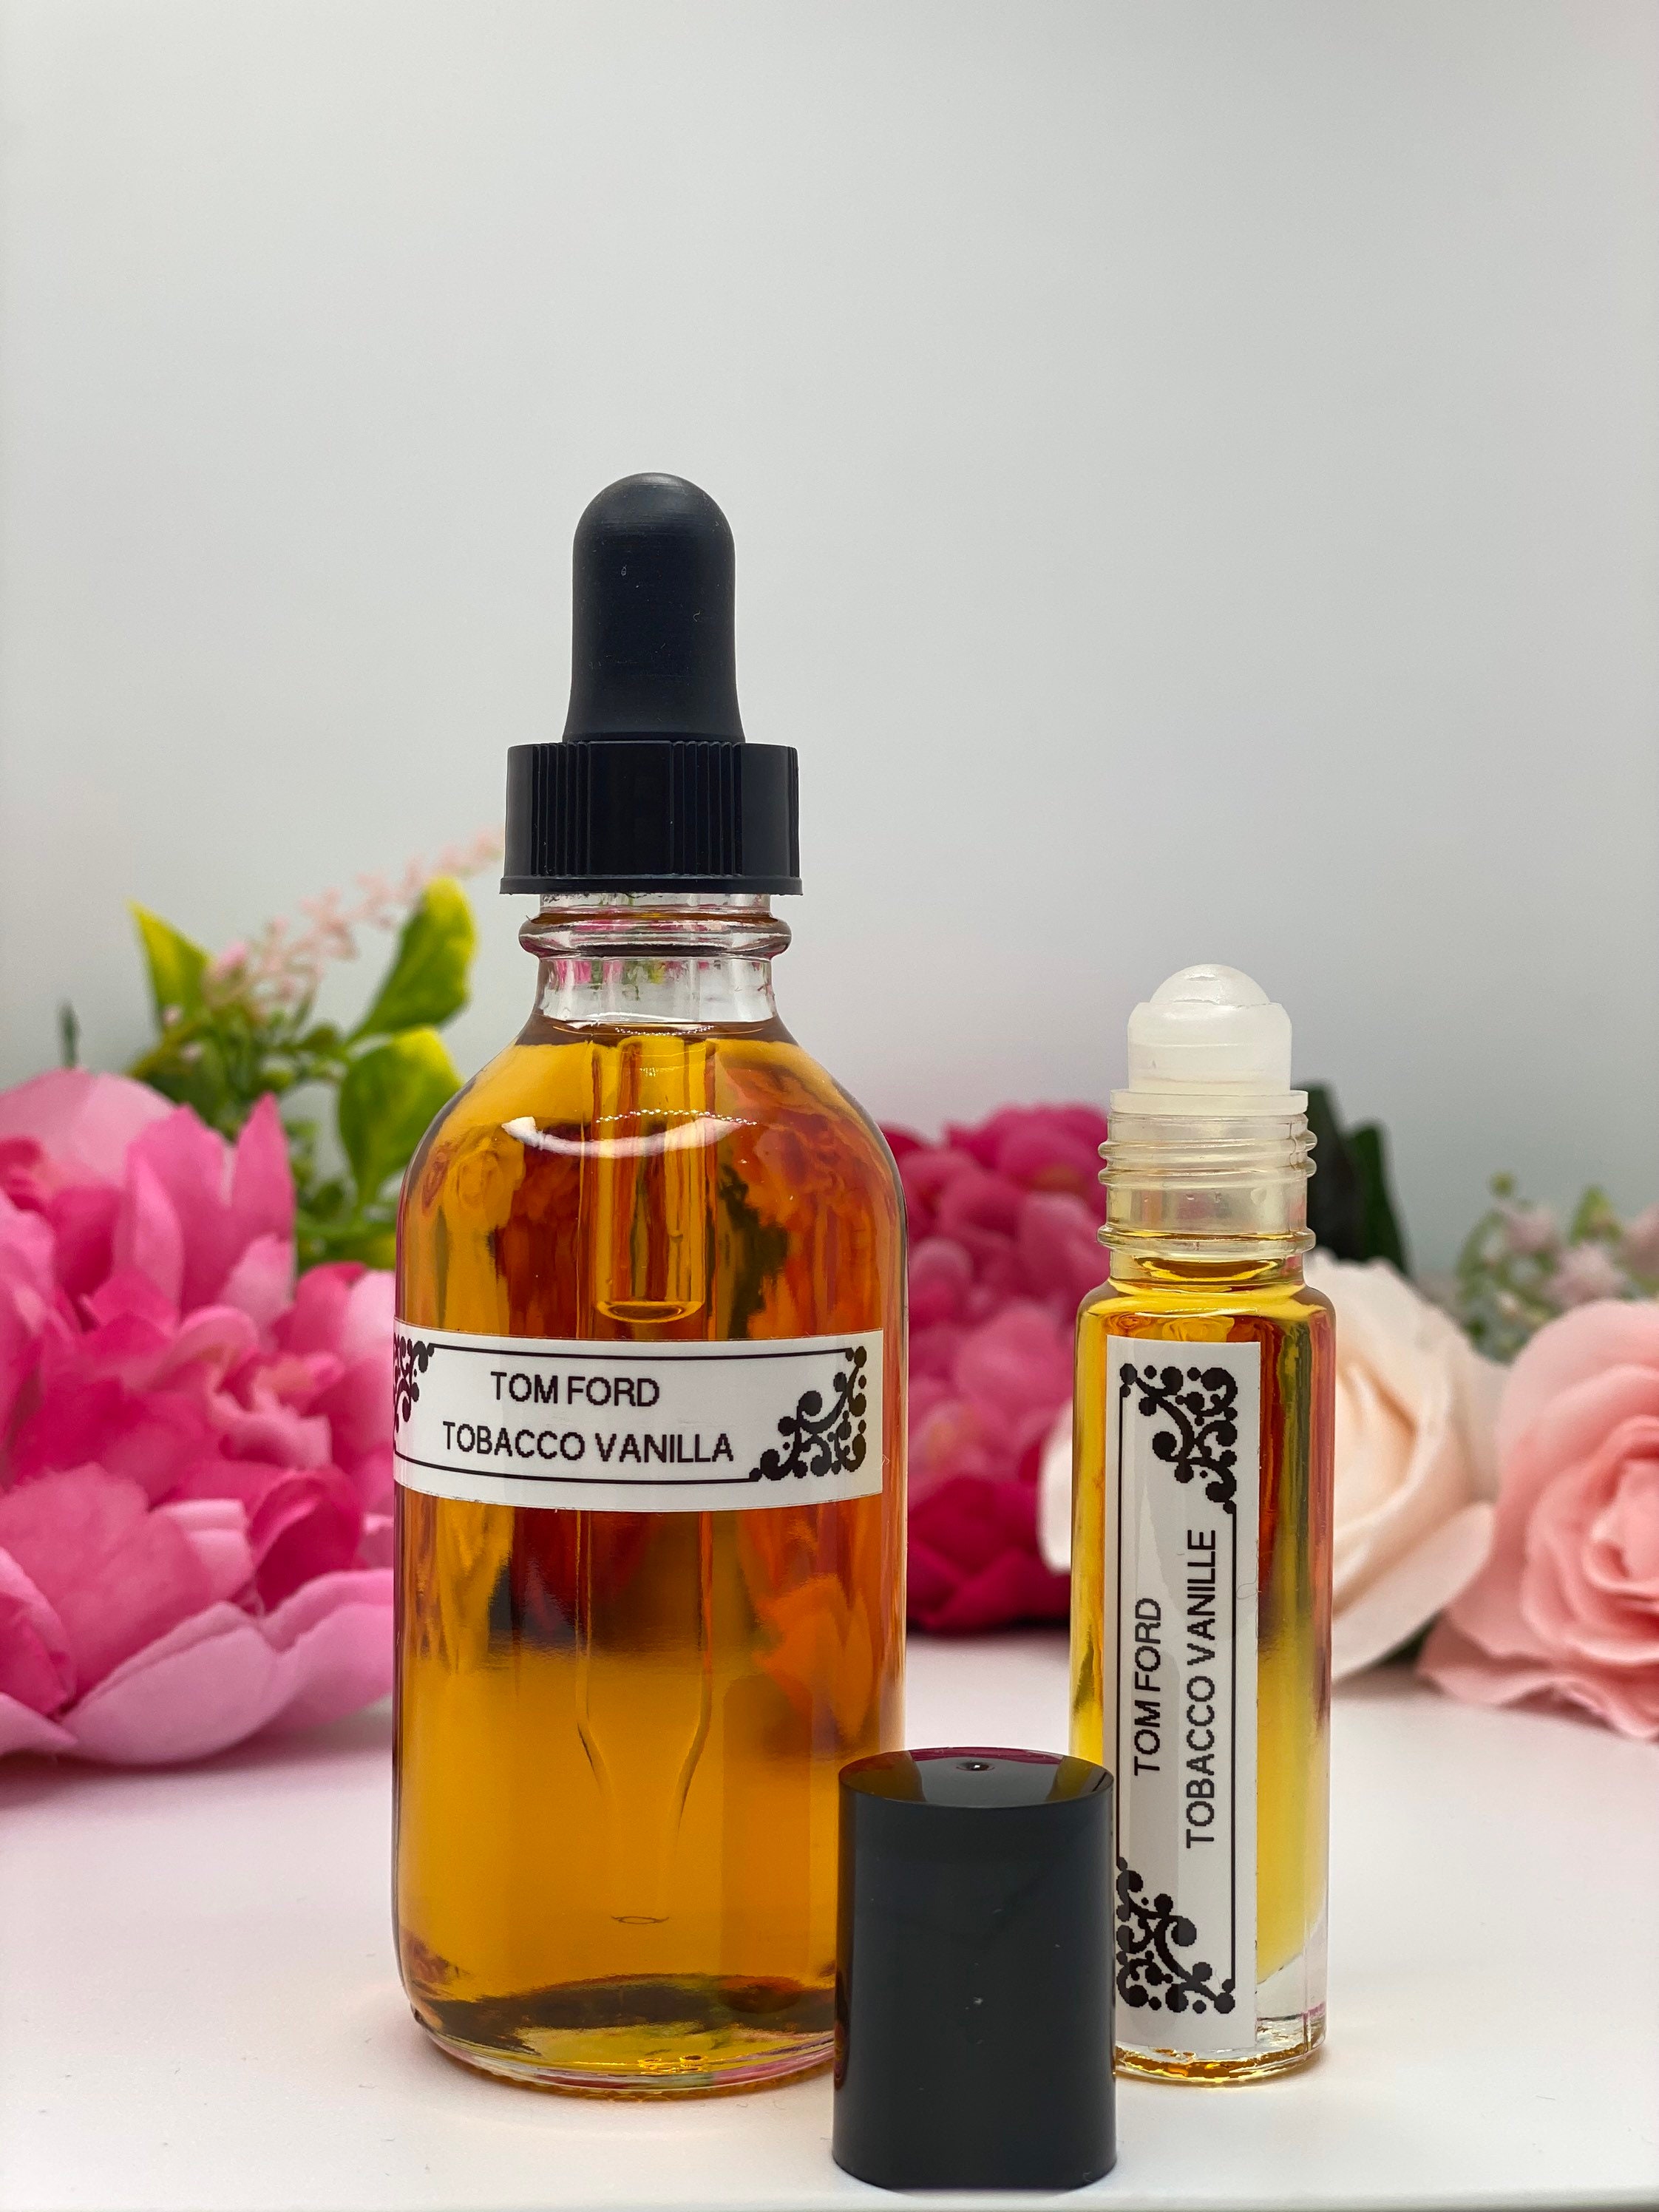 Tobacco Vanilla Alcohol Free Uncut Perfume Oil Scented Body | Etsy